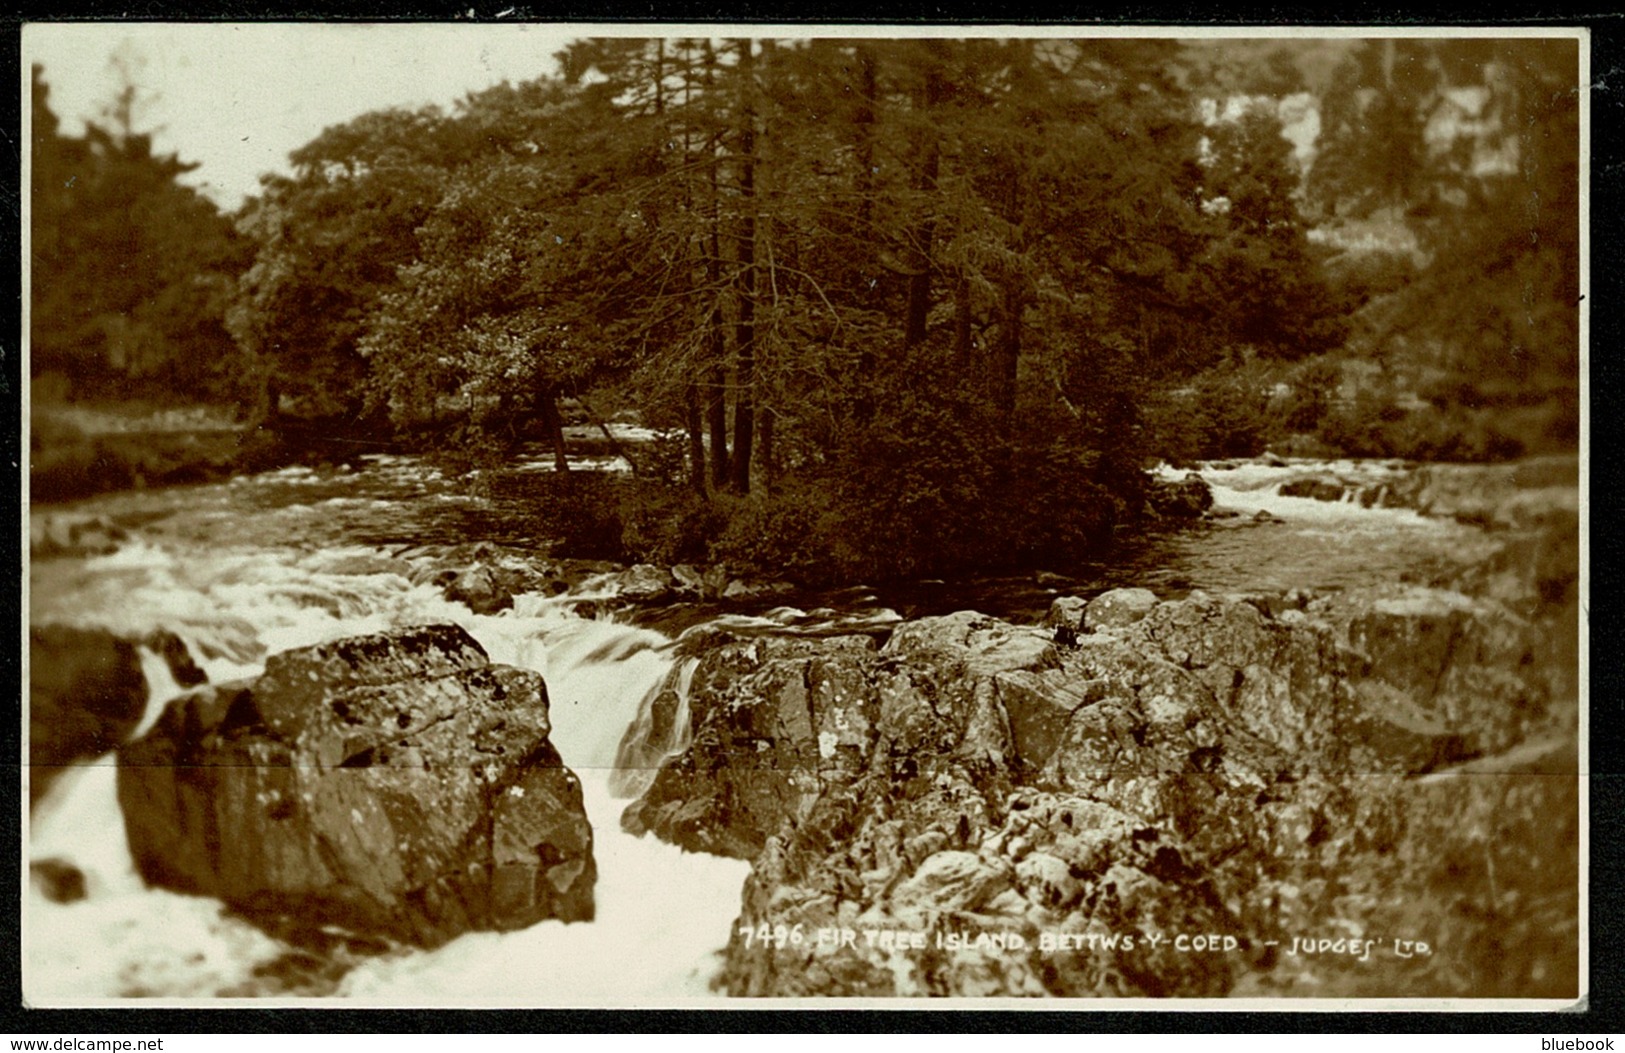 Ref 1267 - 1942 Judges Real Photo Postcard - Fir Tree Island Bettws-Y-Coed - Caernarvon Wales - Caernarvonshire